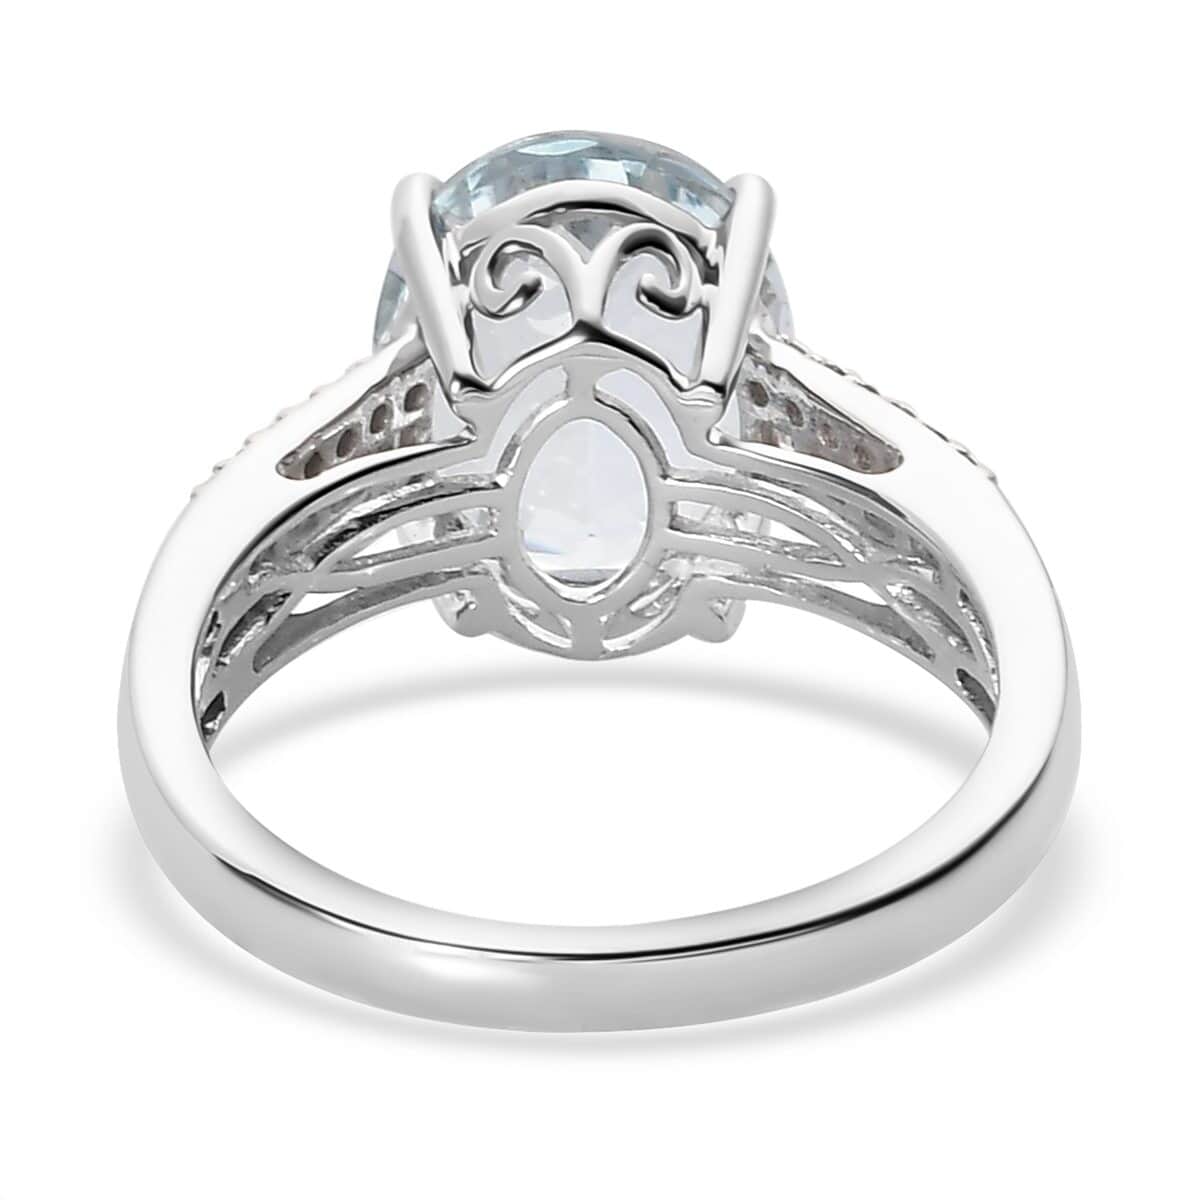 Luxoro 10K White Gold Premium Espirito Santo Aquamarine and Diamond Ring (Size 8.0) 3.40 ctw image number 4